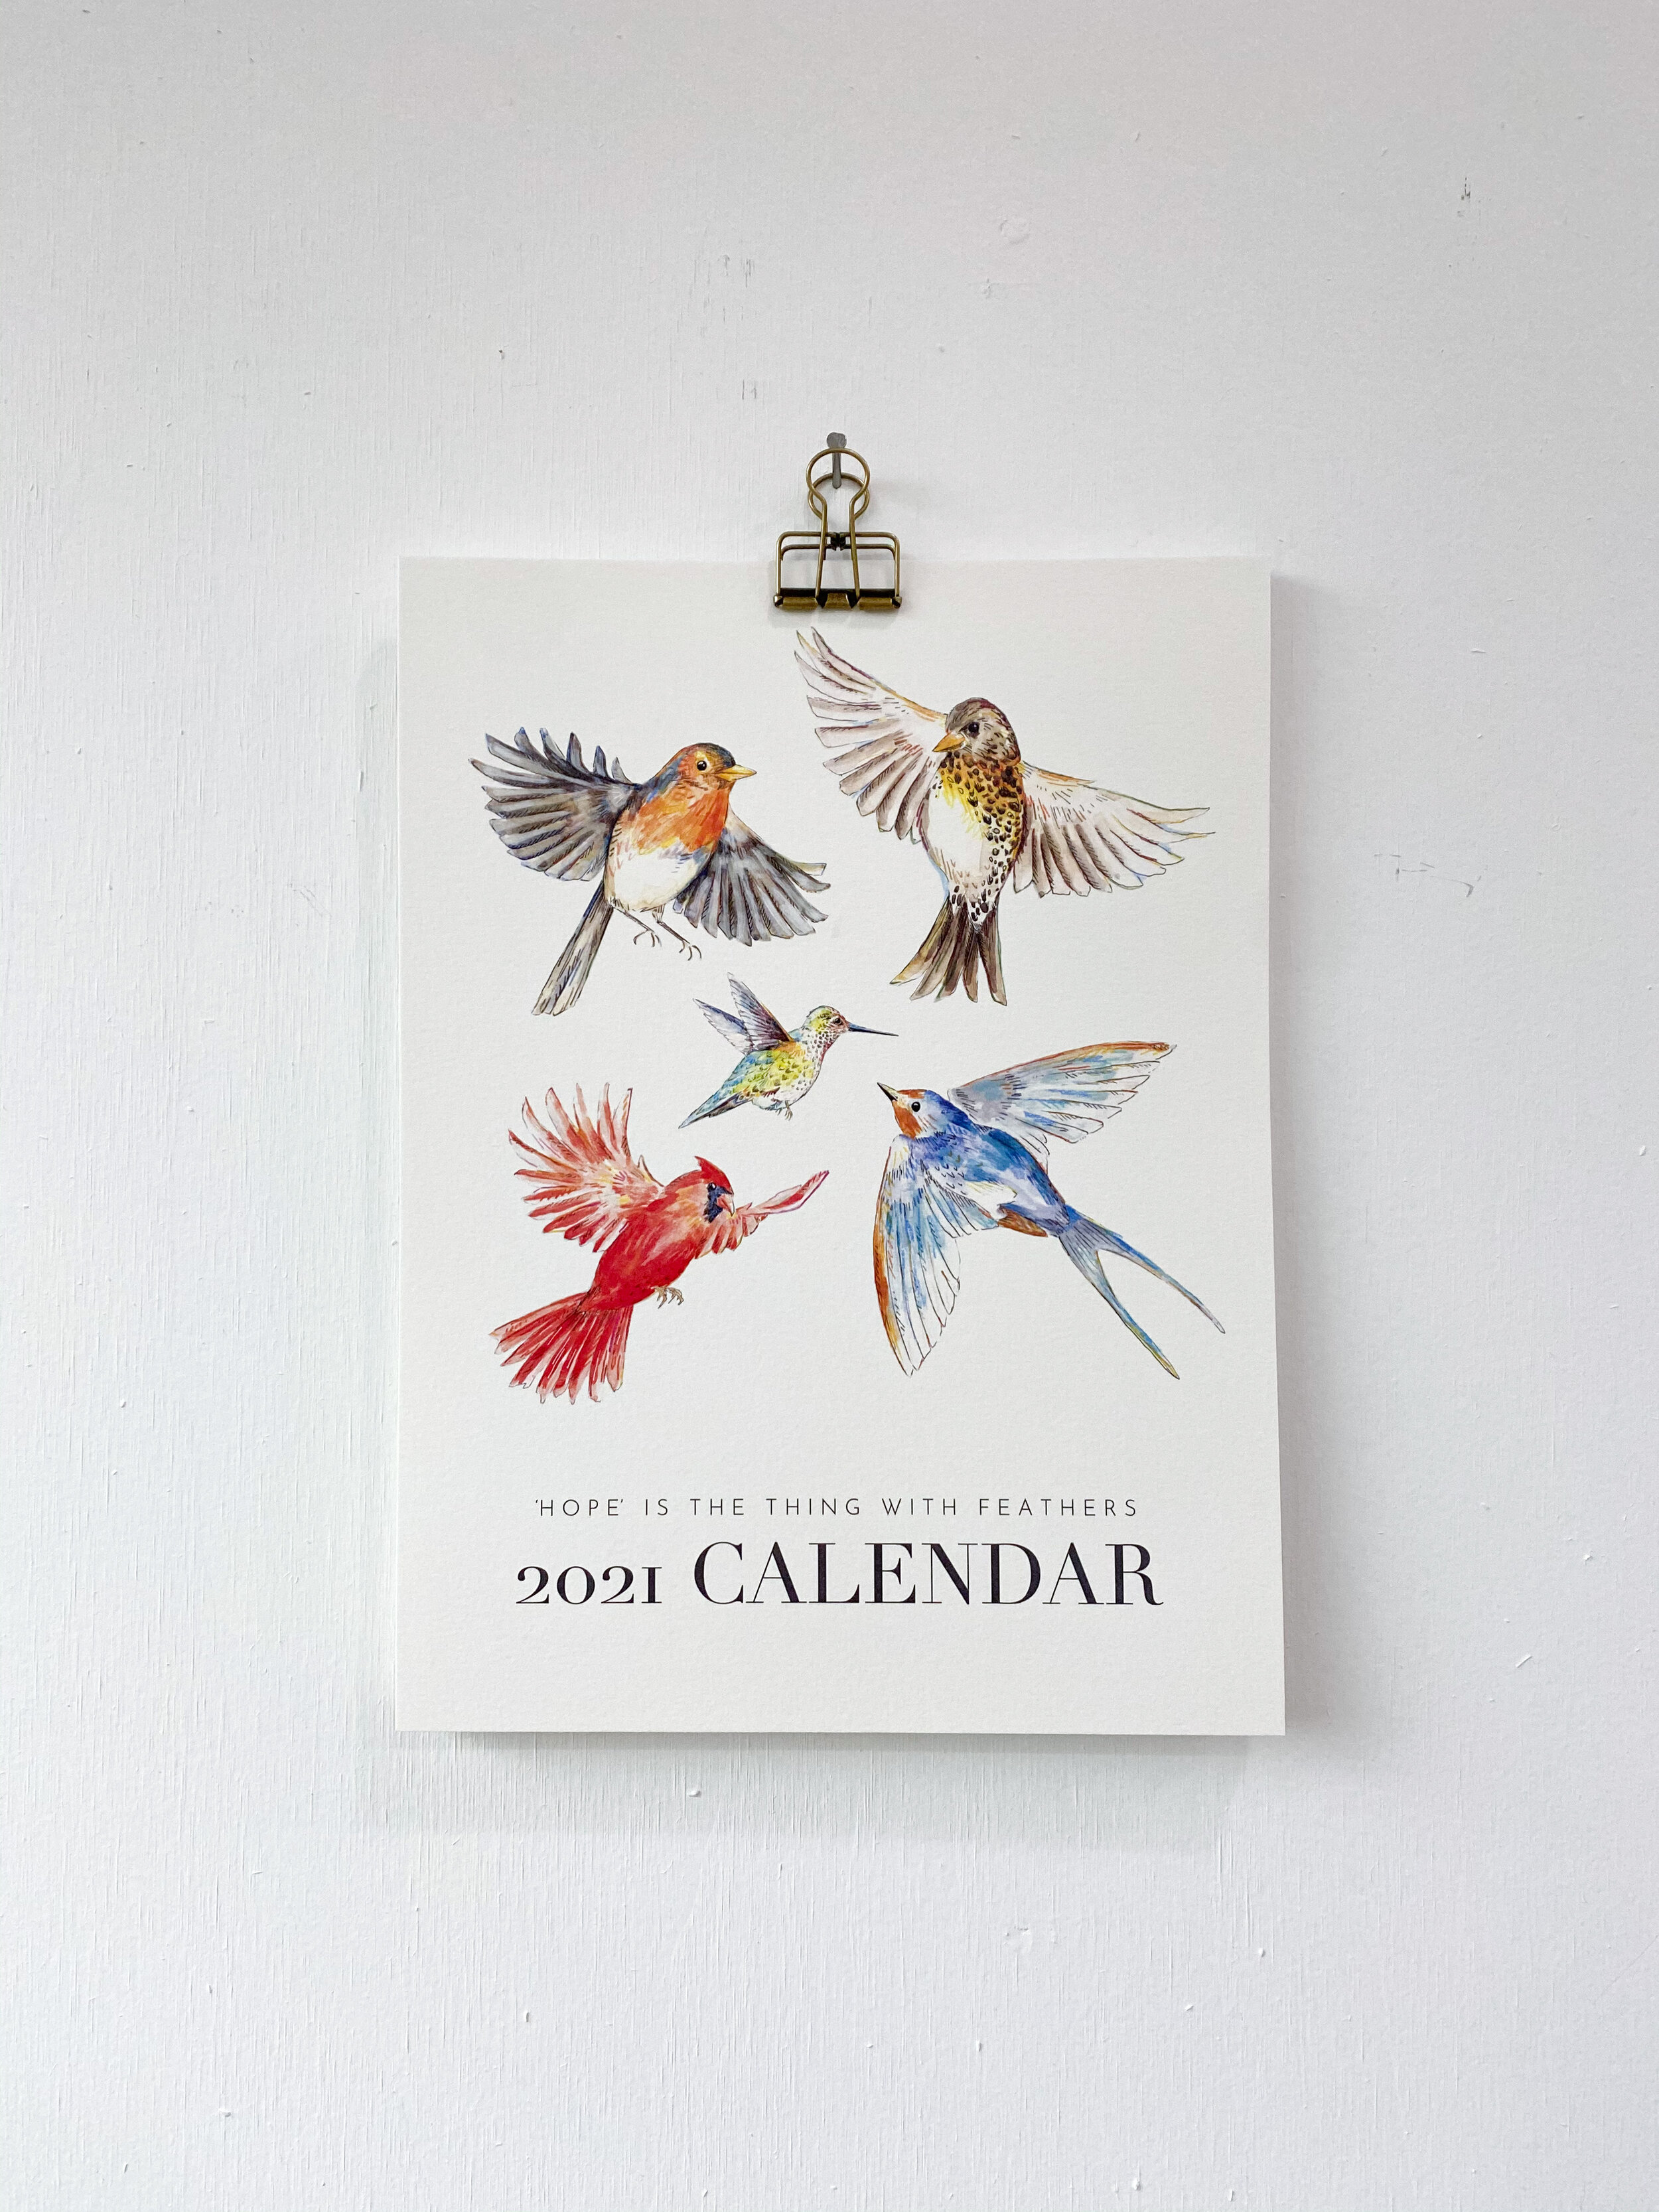 The birdies became a calendar!